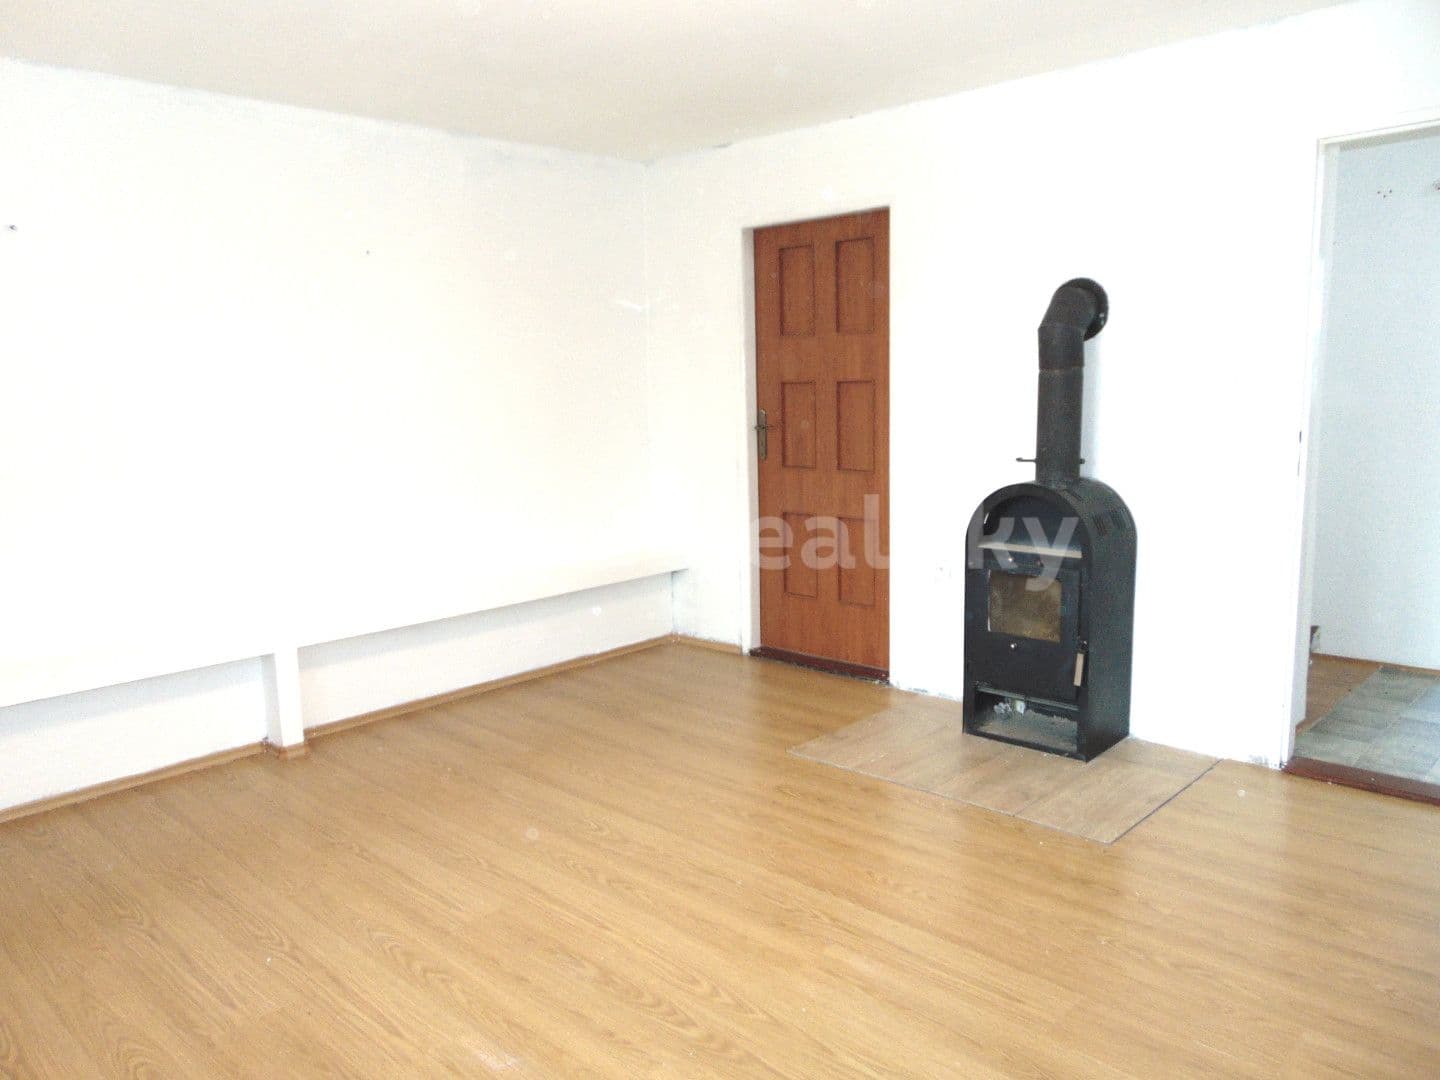 3 bedroom flat for sale, 77 m², Martiněves, Ústecký Region